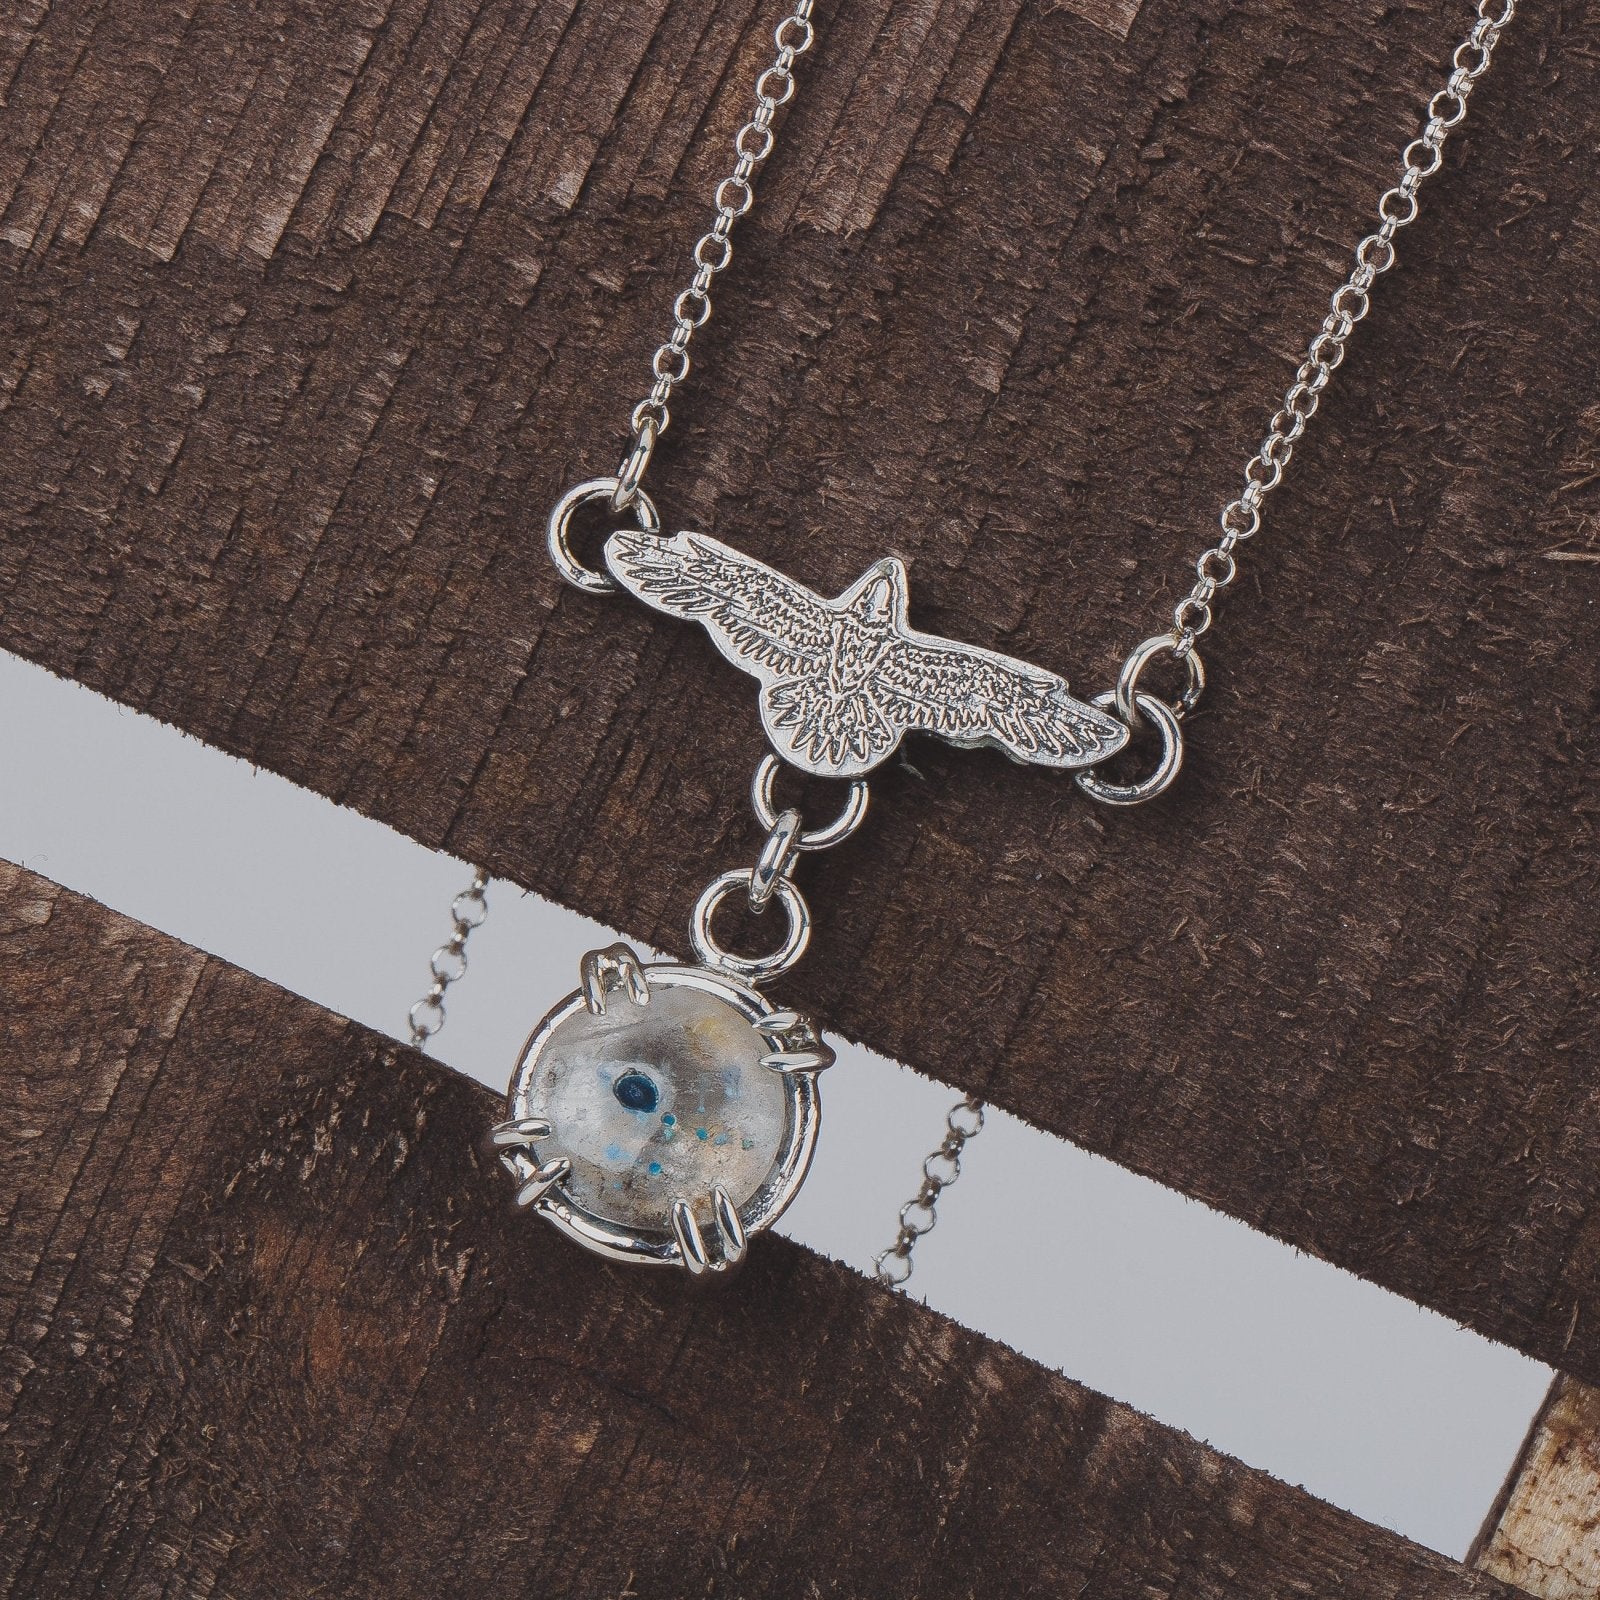 Raven Necklace With Medusa Quartz - Melanie Golden Jewelry - fauna, gemstone necklace, necklace, necklaces, symbolic